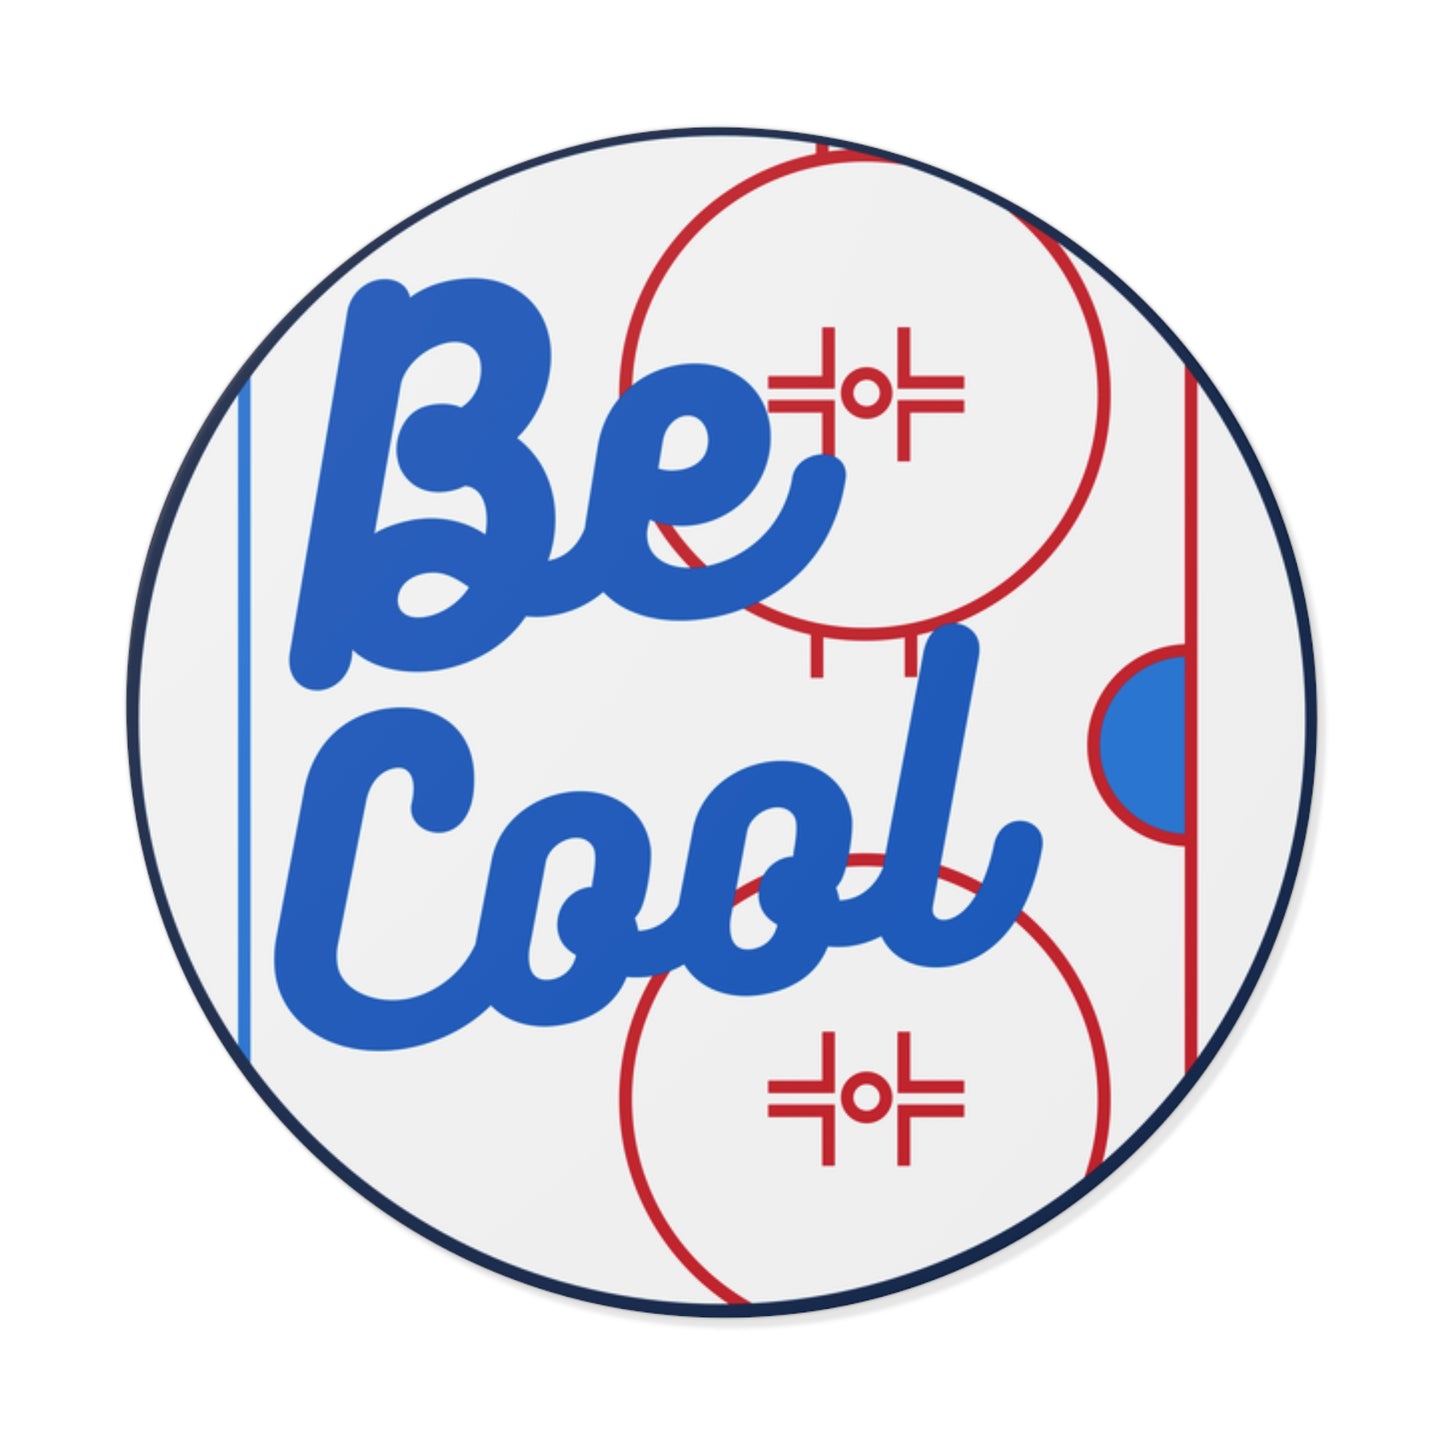 Be Cool Sticker